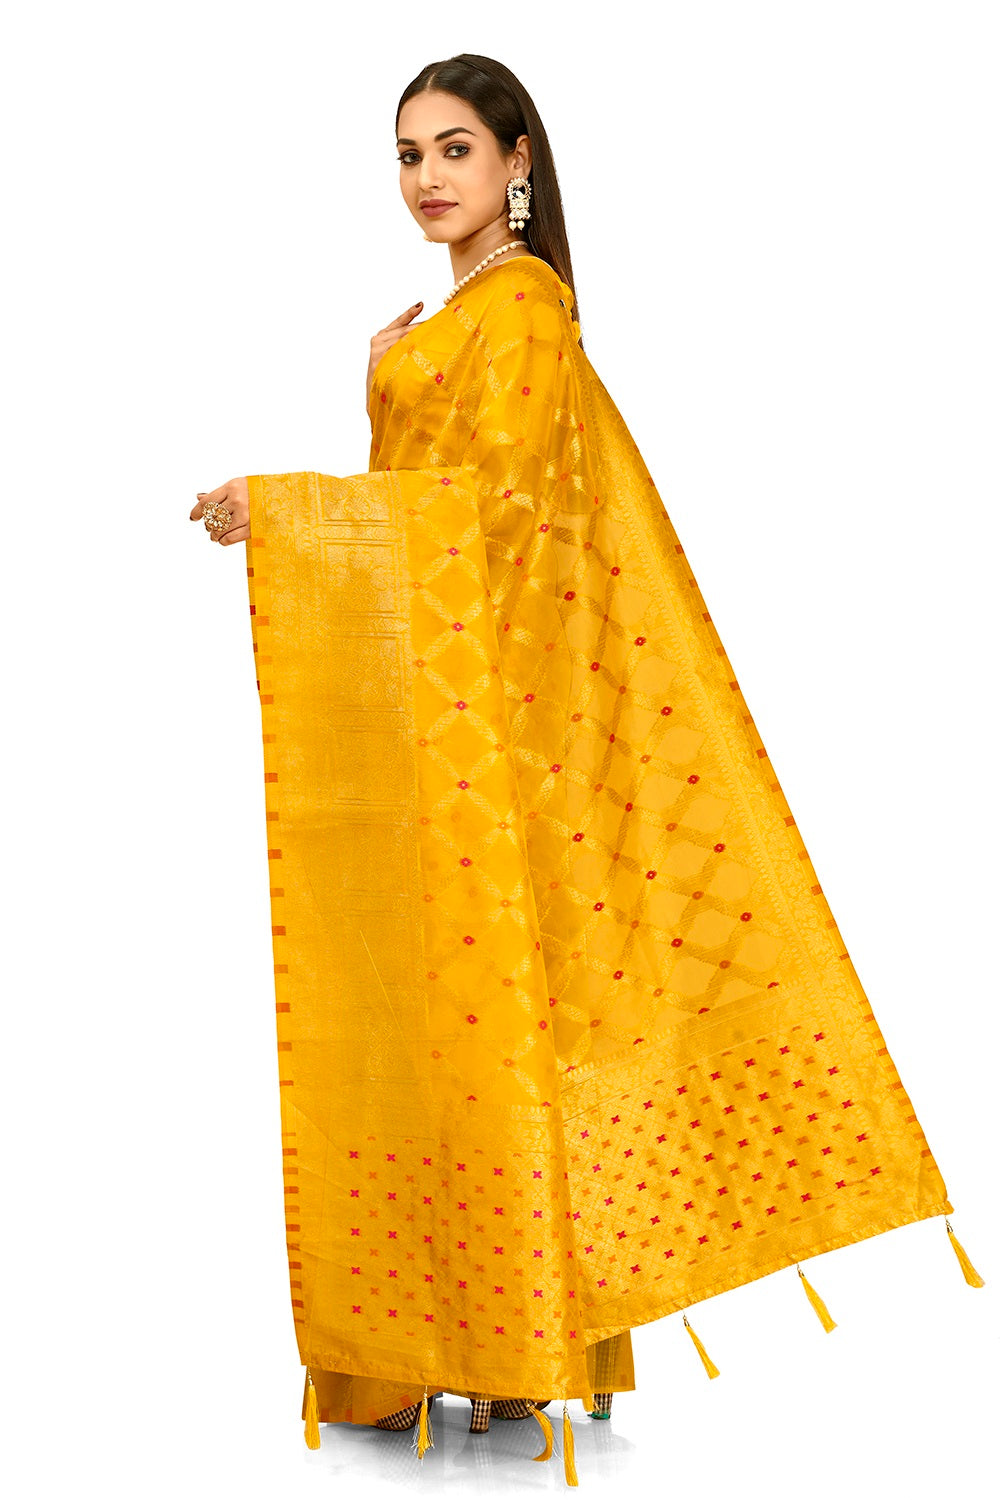 Treanding Yellow Silk Saree For Wedding Buy Now